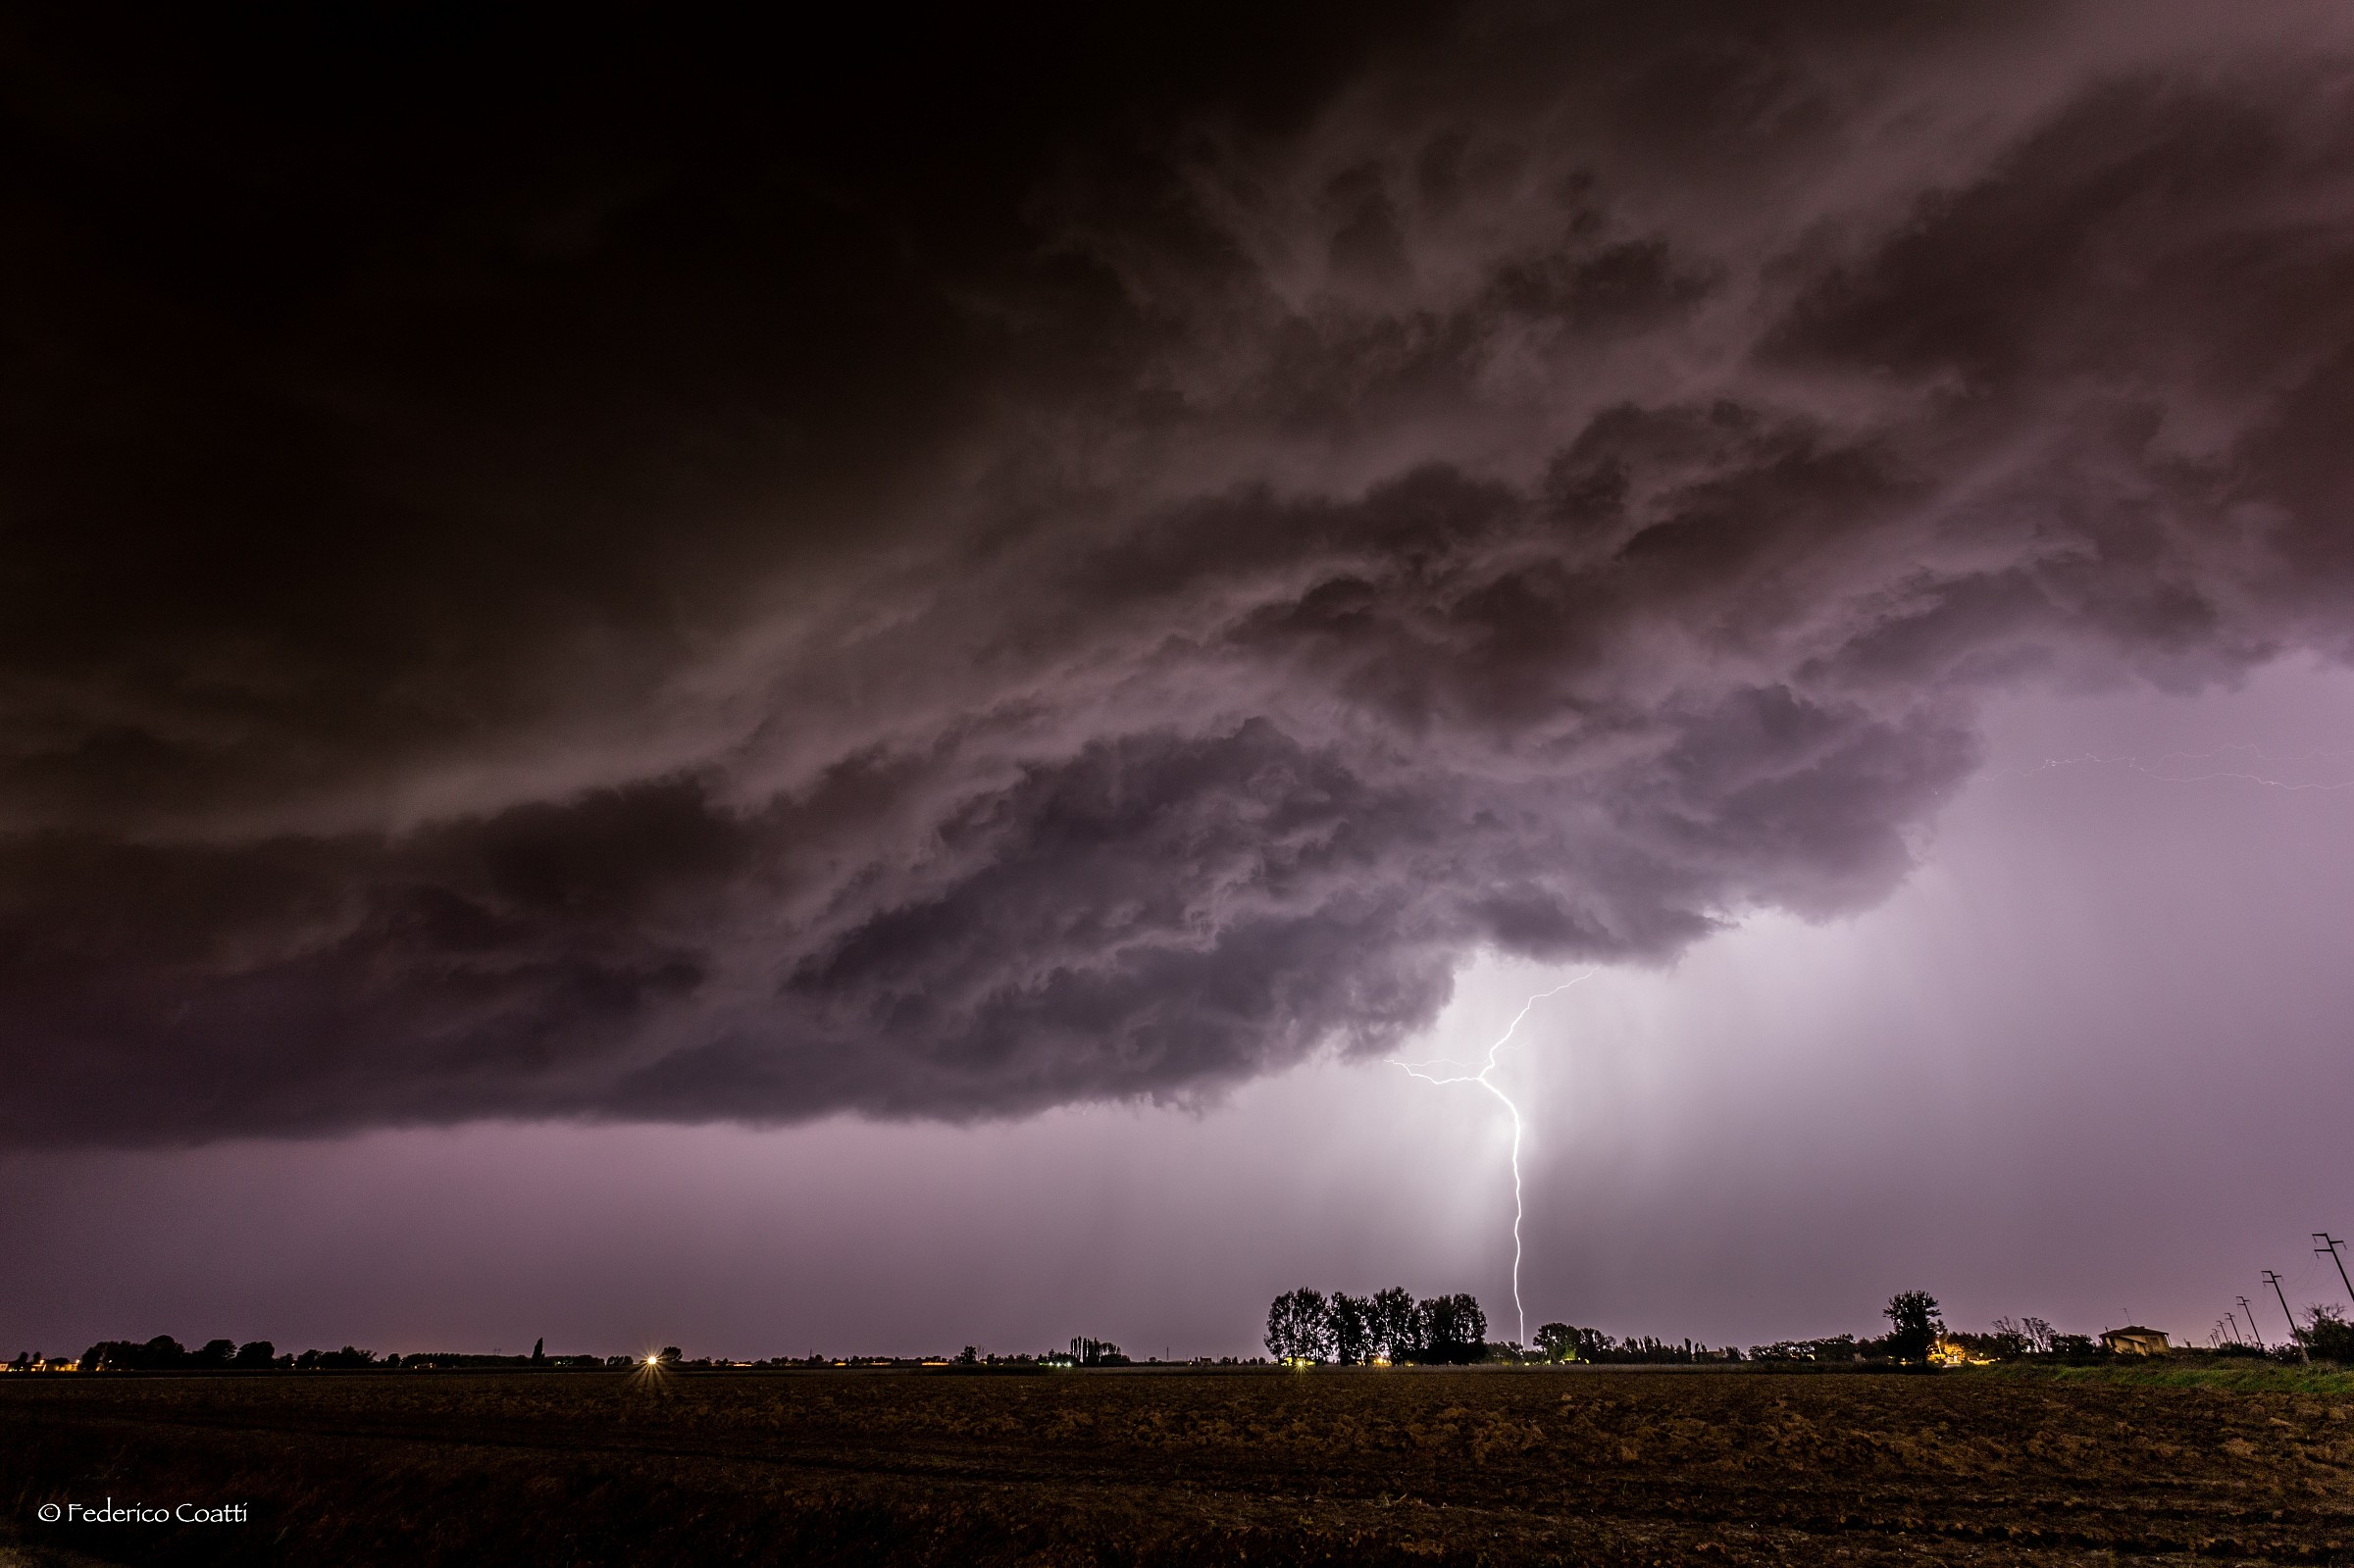 Electrical Storm near Ferrara...